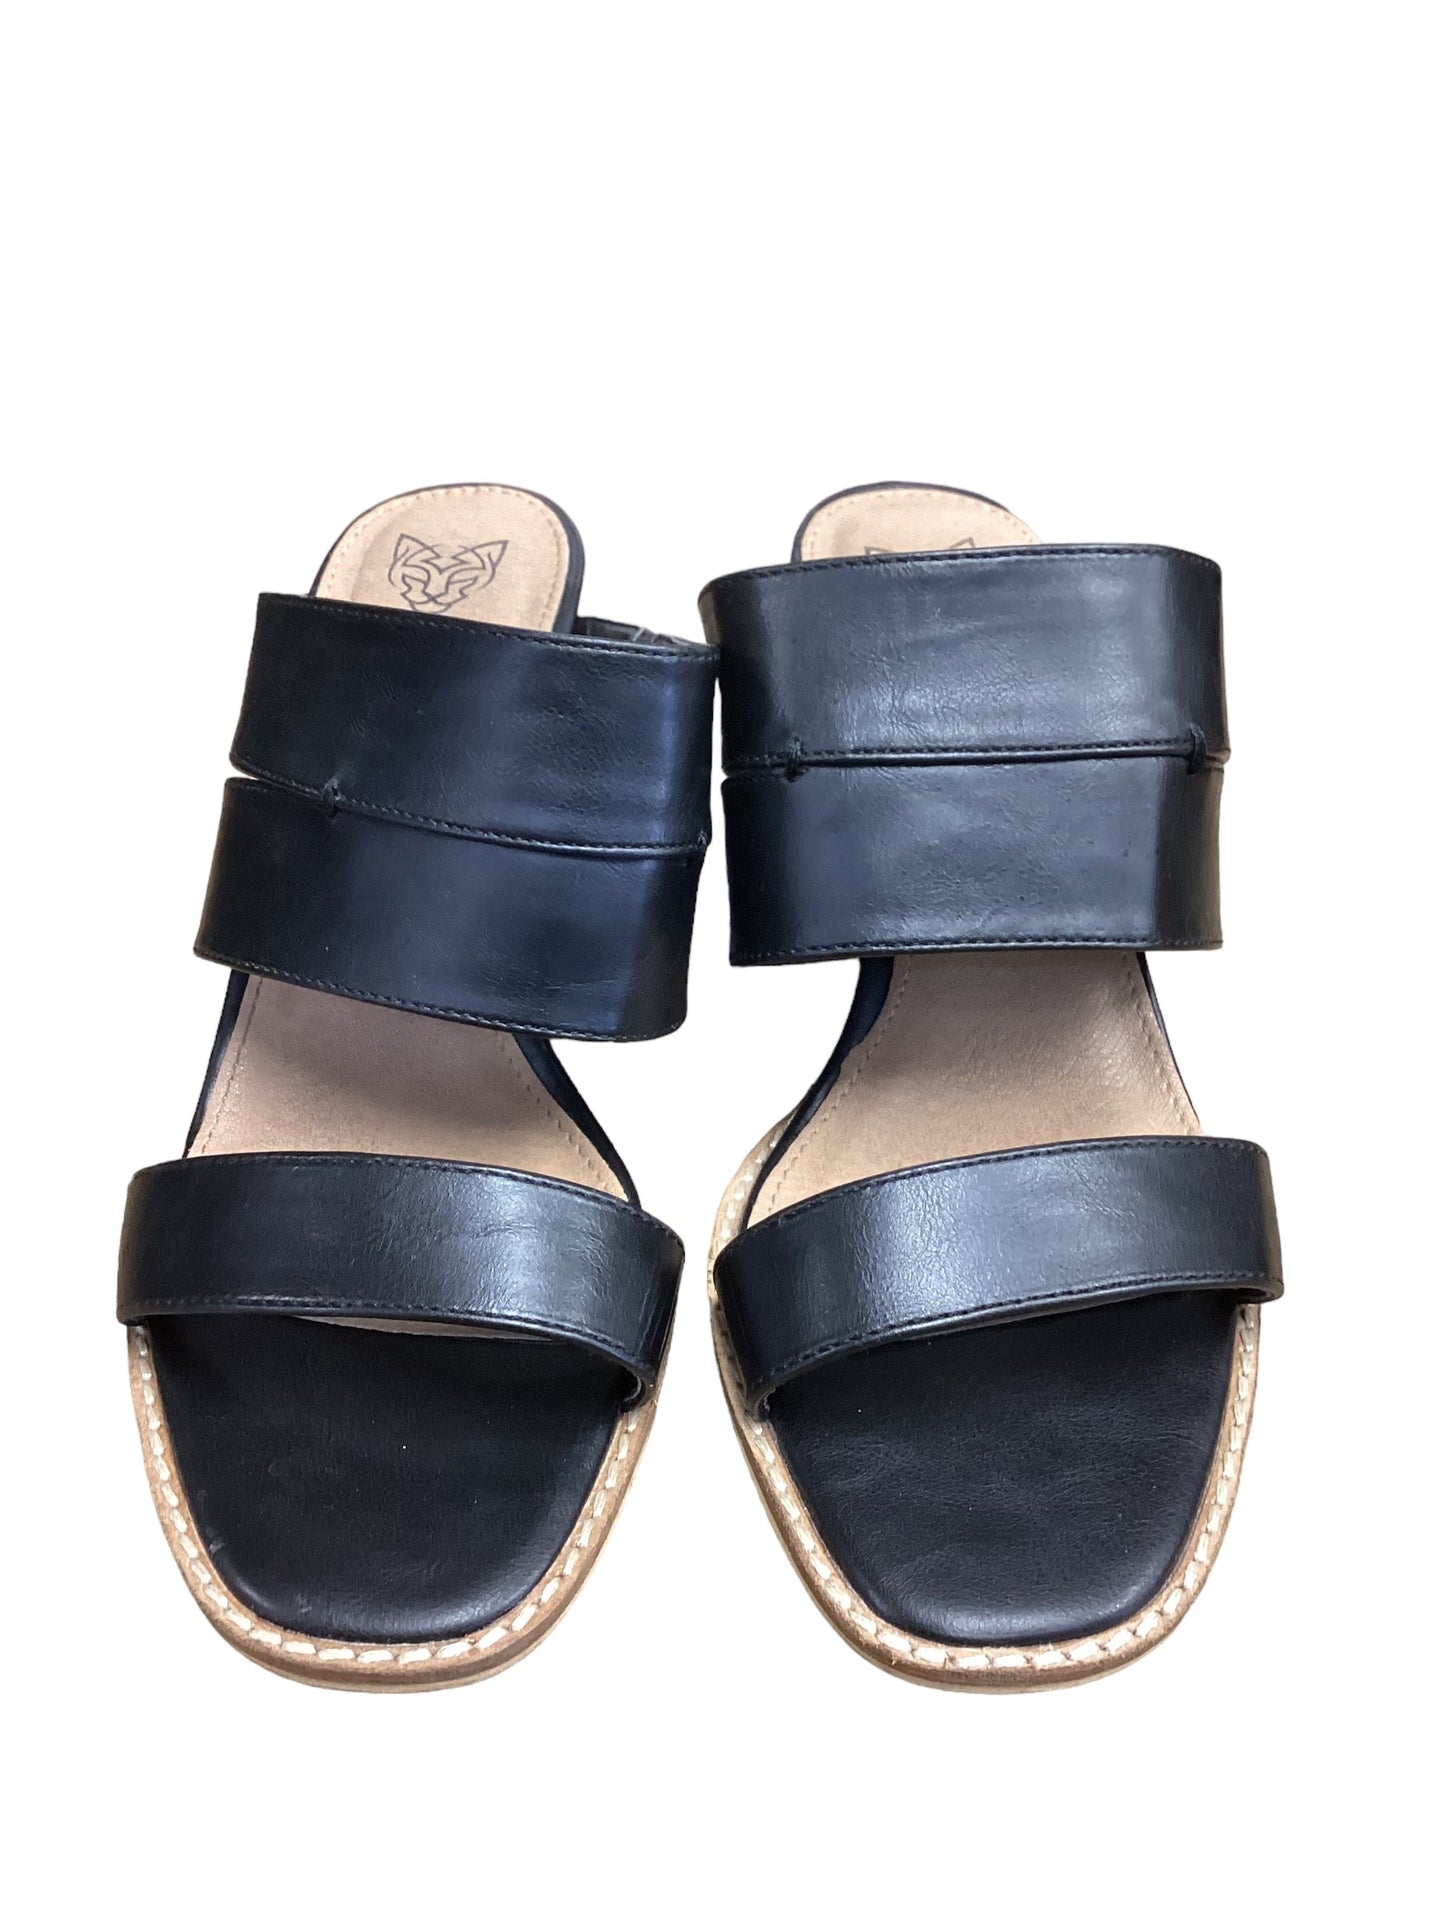 Black Shoes Heels Block Clothes Mentor, Size 8